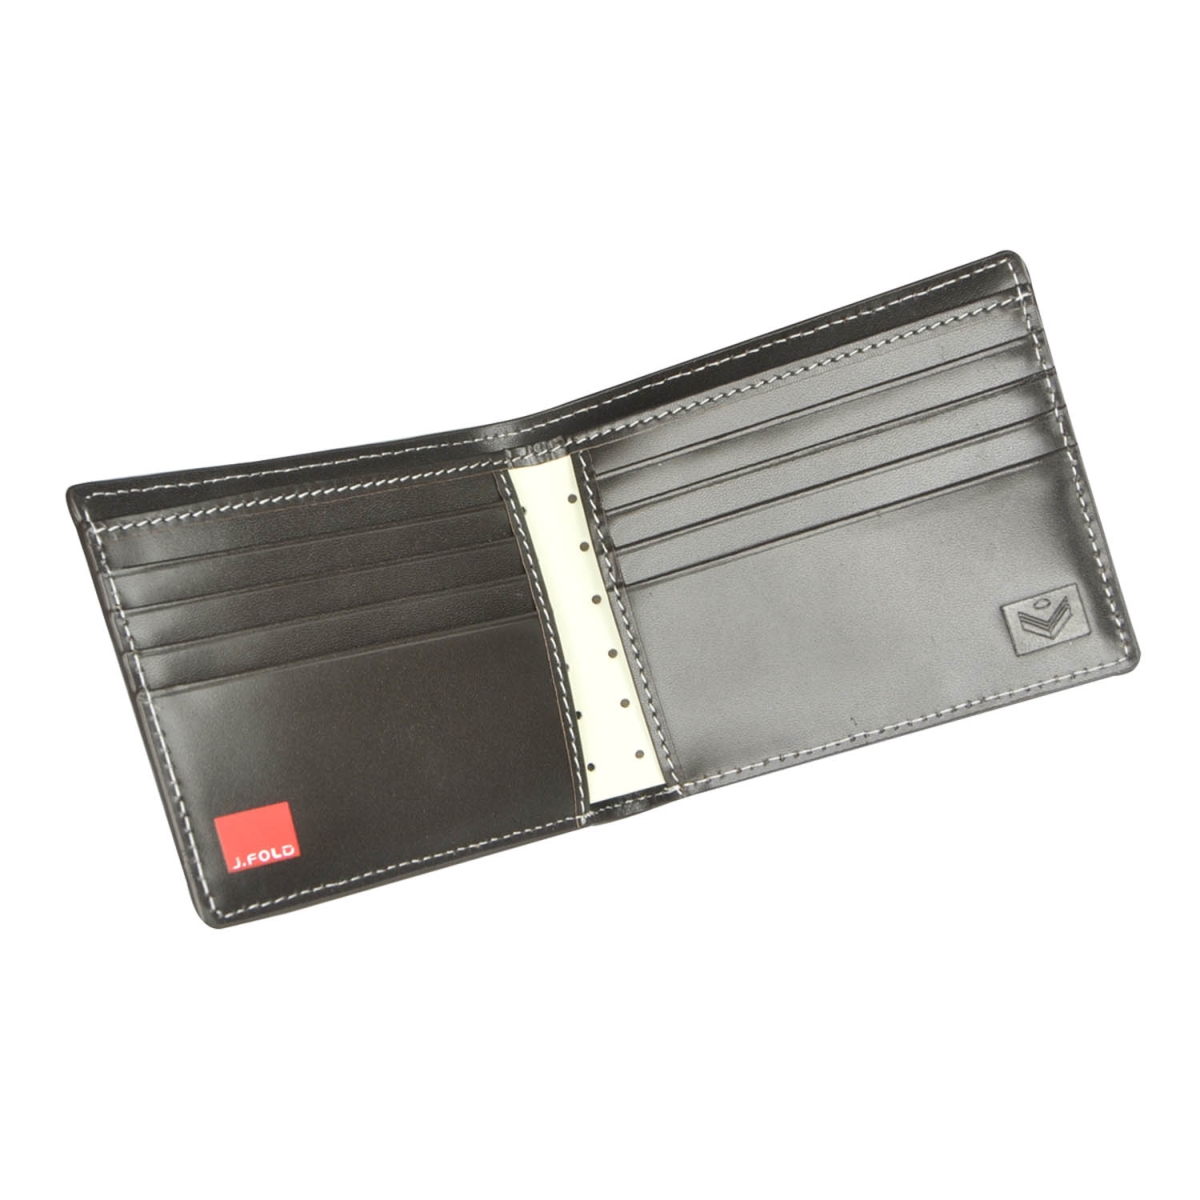 J.FOLD Leather Wallet Plaid - Ivory